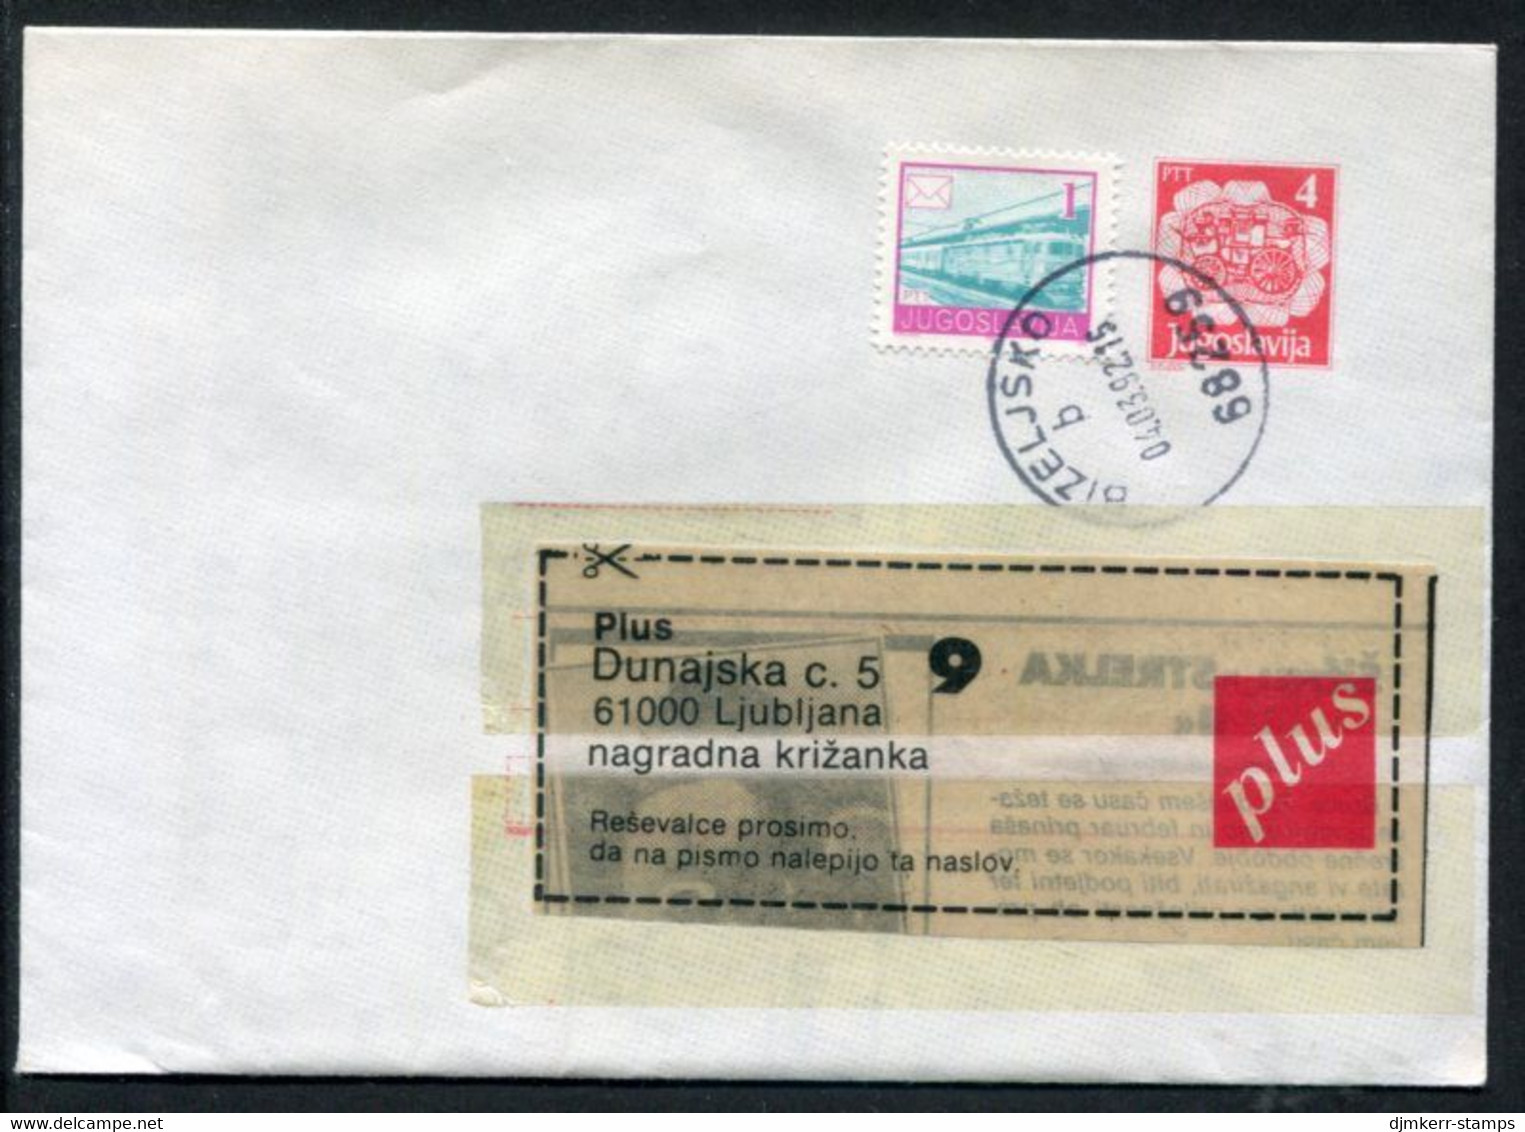 YUGOSLAVIA 1991 Mailcoach 4 D. Stationery Envelope Used With Additional Franking.  Michel U98 - Enteros Postales